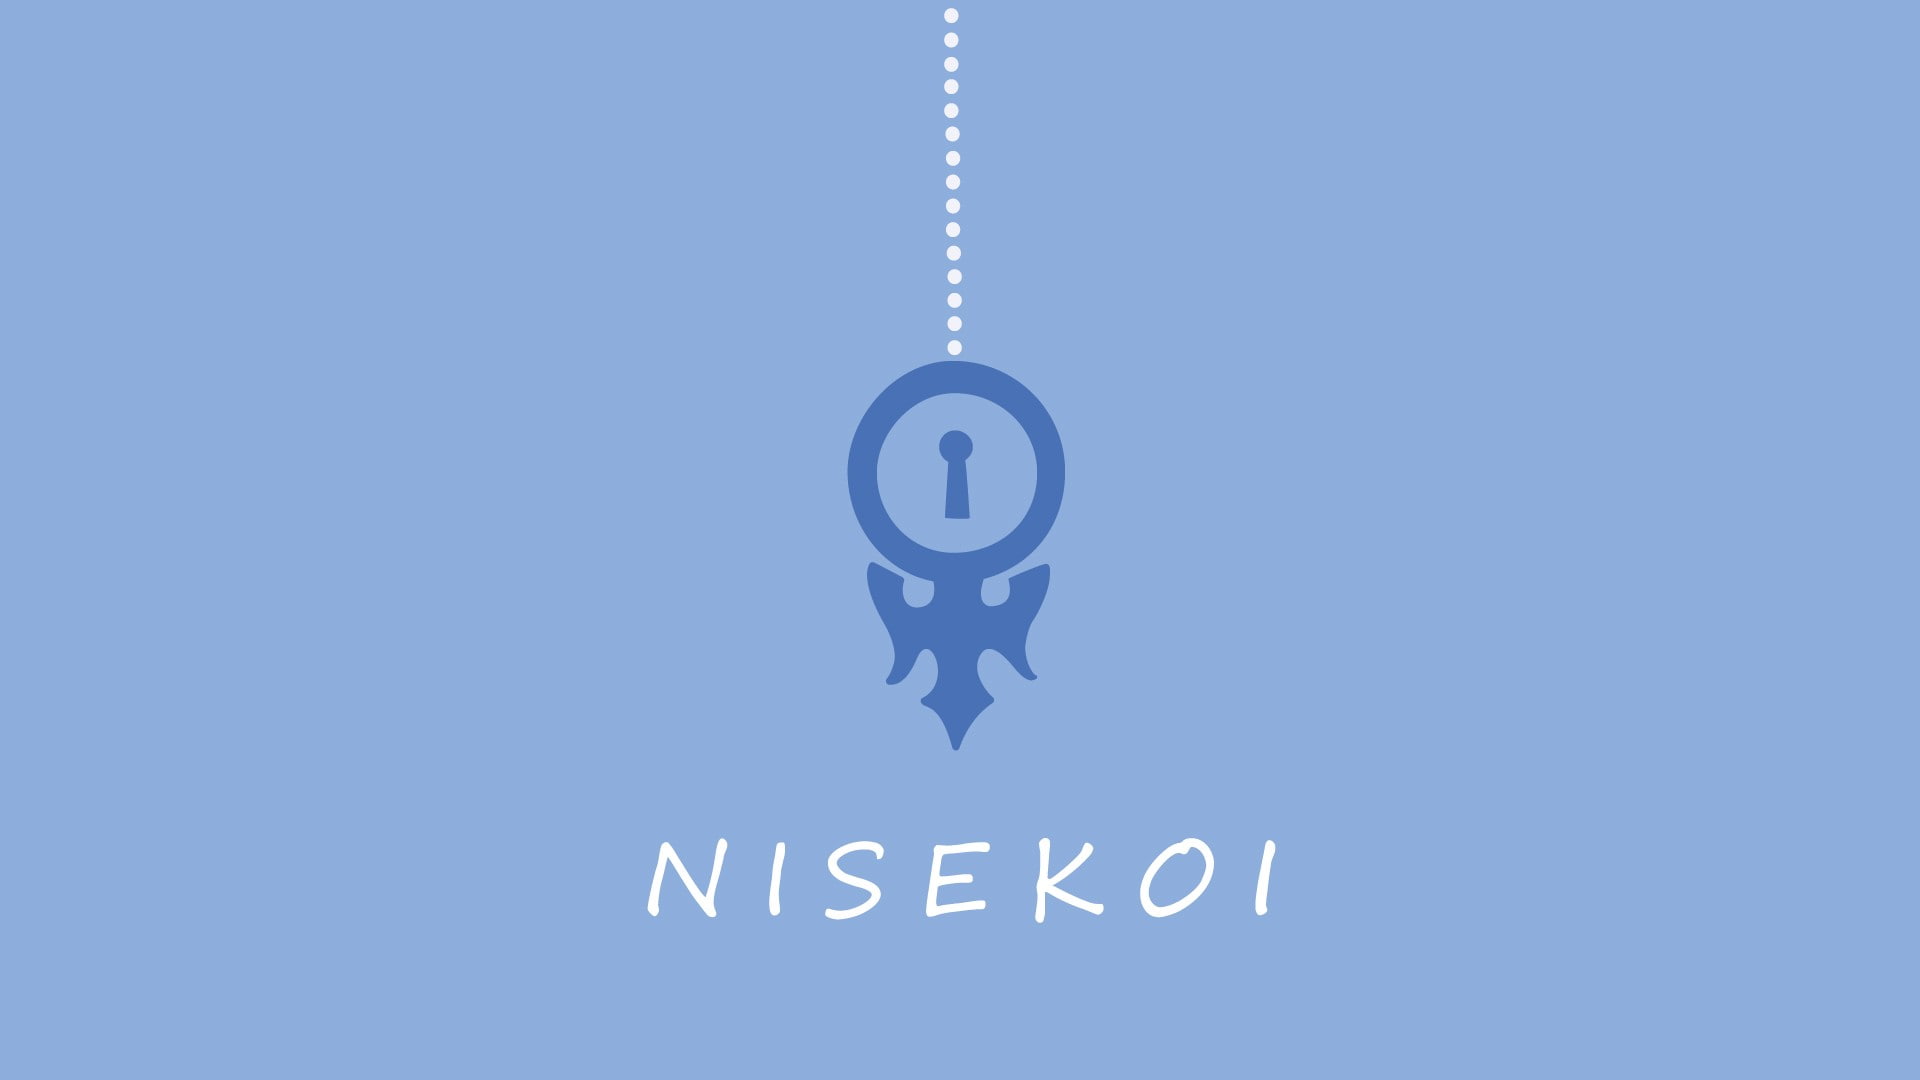 Nisekoi, logo, blue, communication, studio shot, indoors, no people